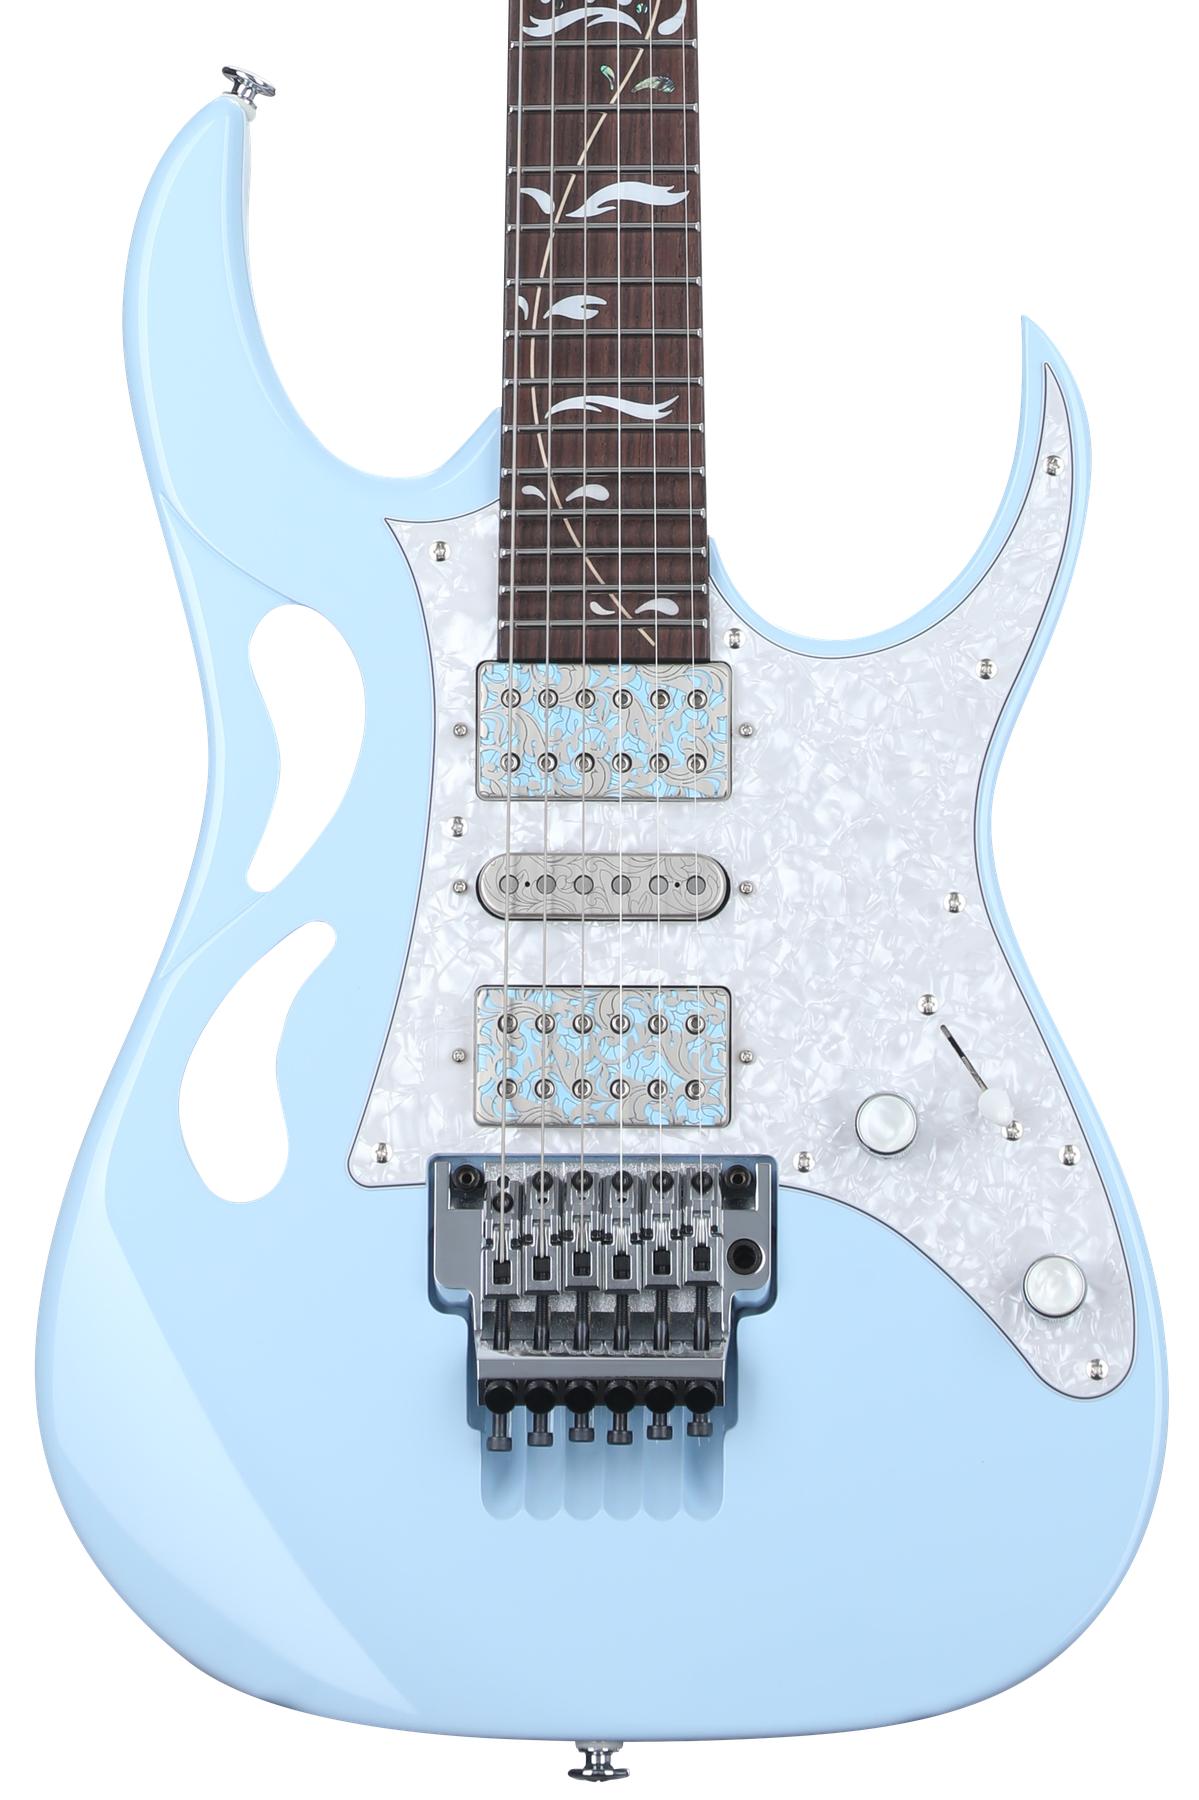 Ibanez Steve Vai Signature PIA3761C Electric Guitar - Blue Powder